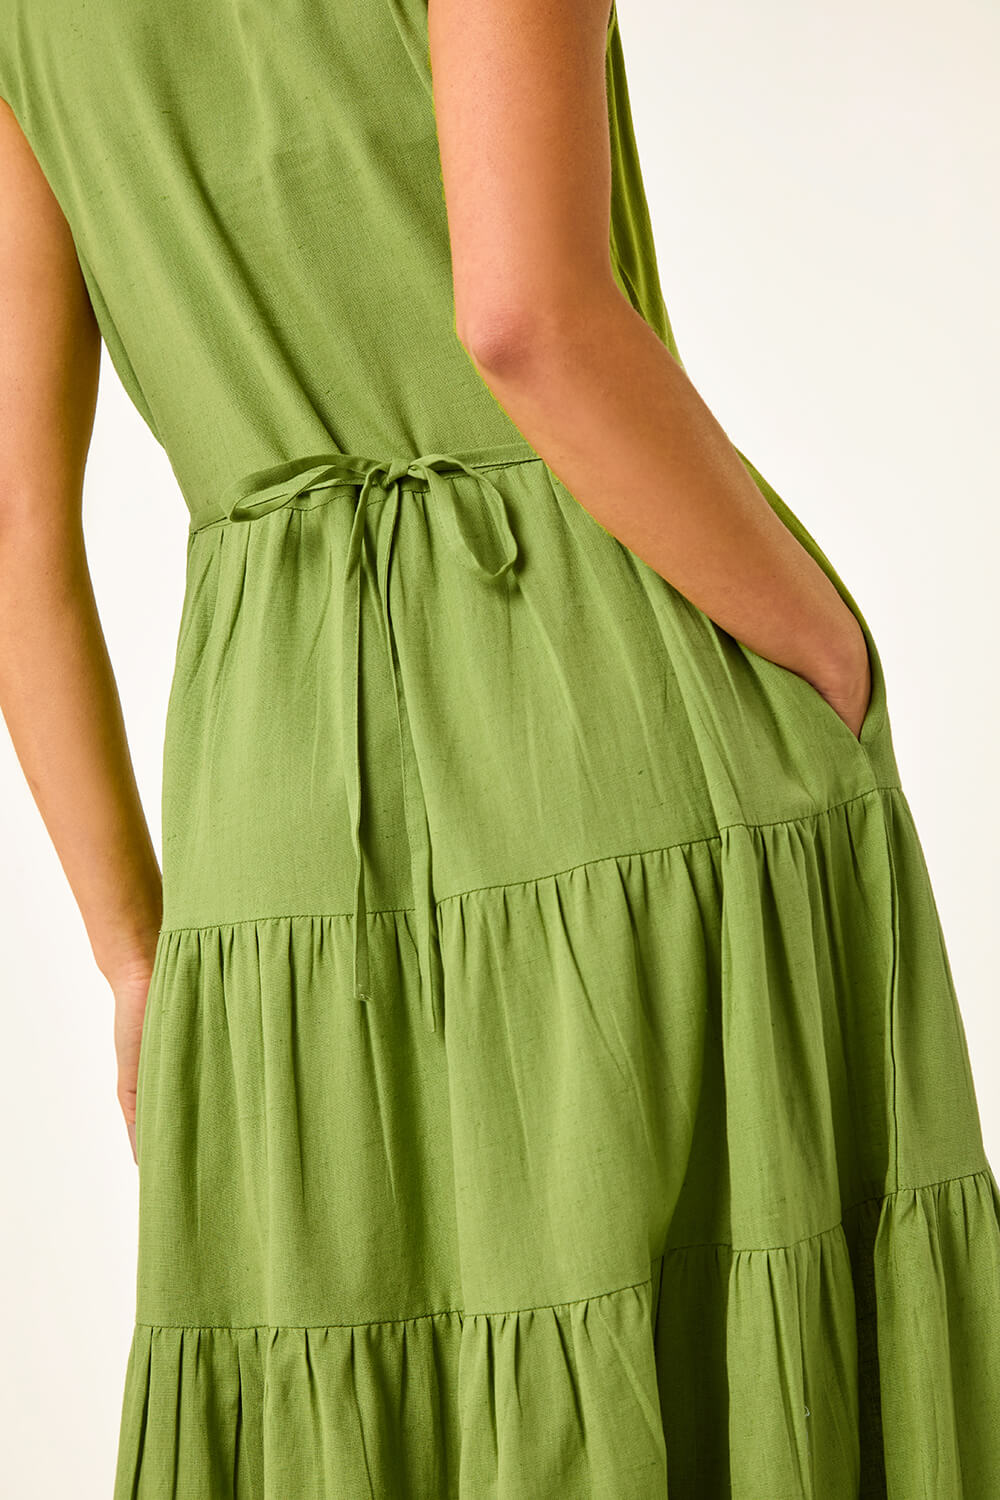 KHAKI Petite Cotton Pocket Tiered Midi Dress, Image 5 of 5